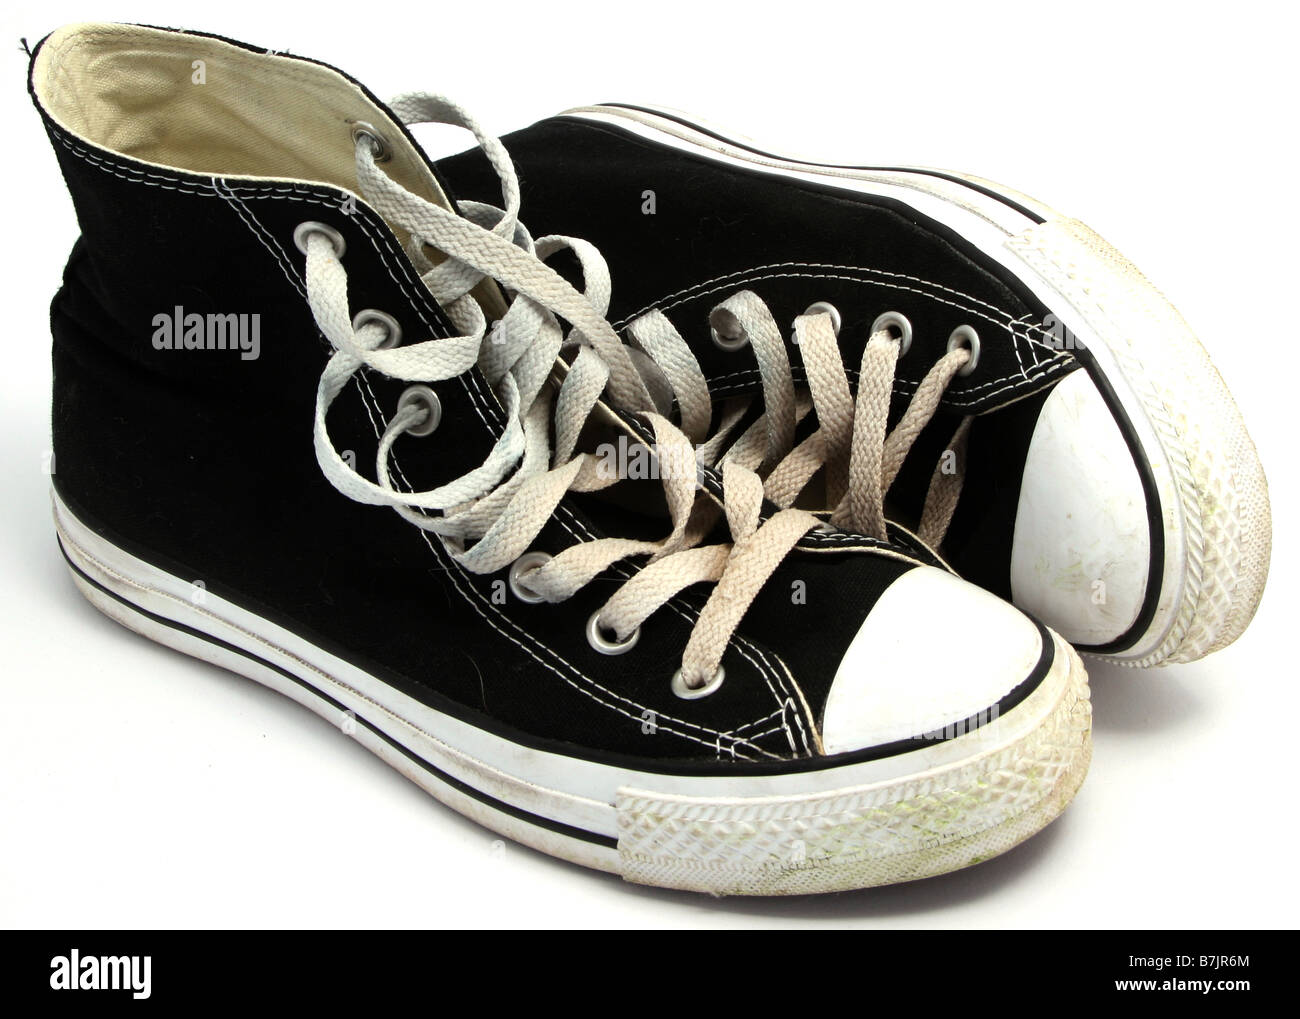 Black sneakers - Like Converse - January 2009 Stock Photo - Alamy